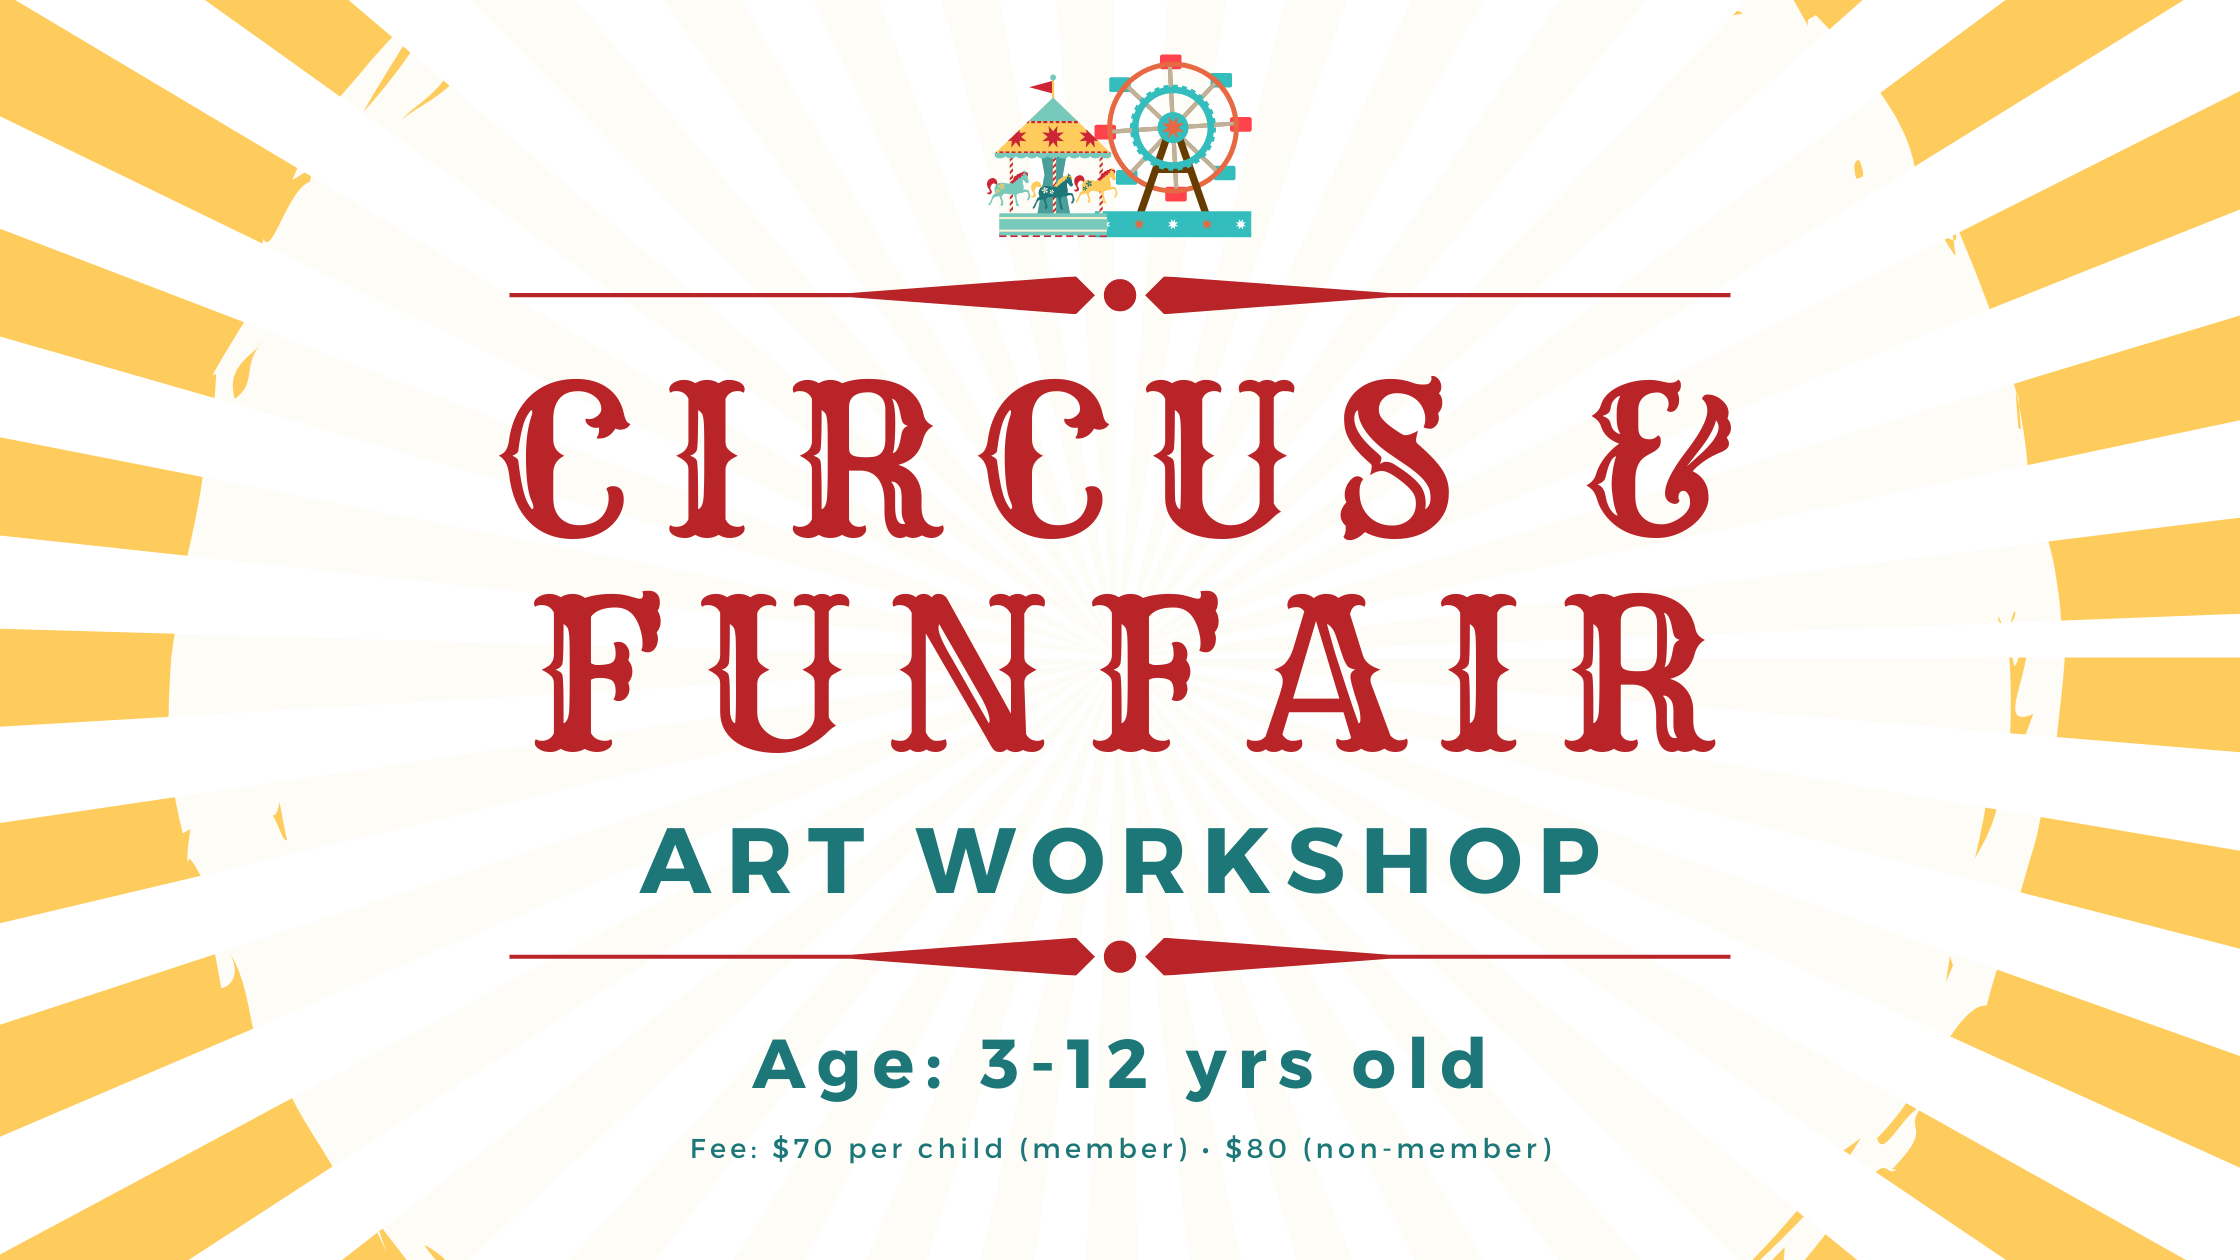 Circus and funfair art workshop for kids